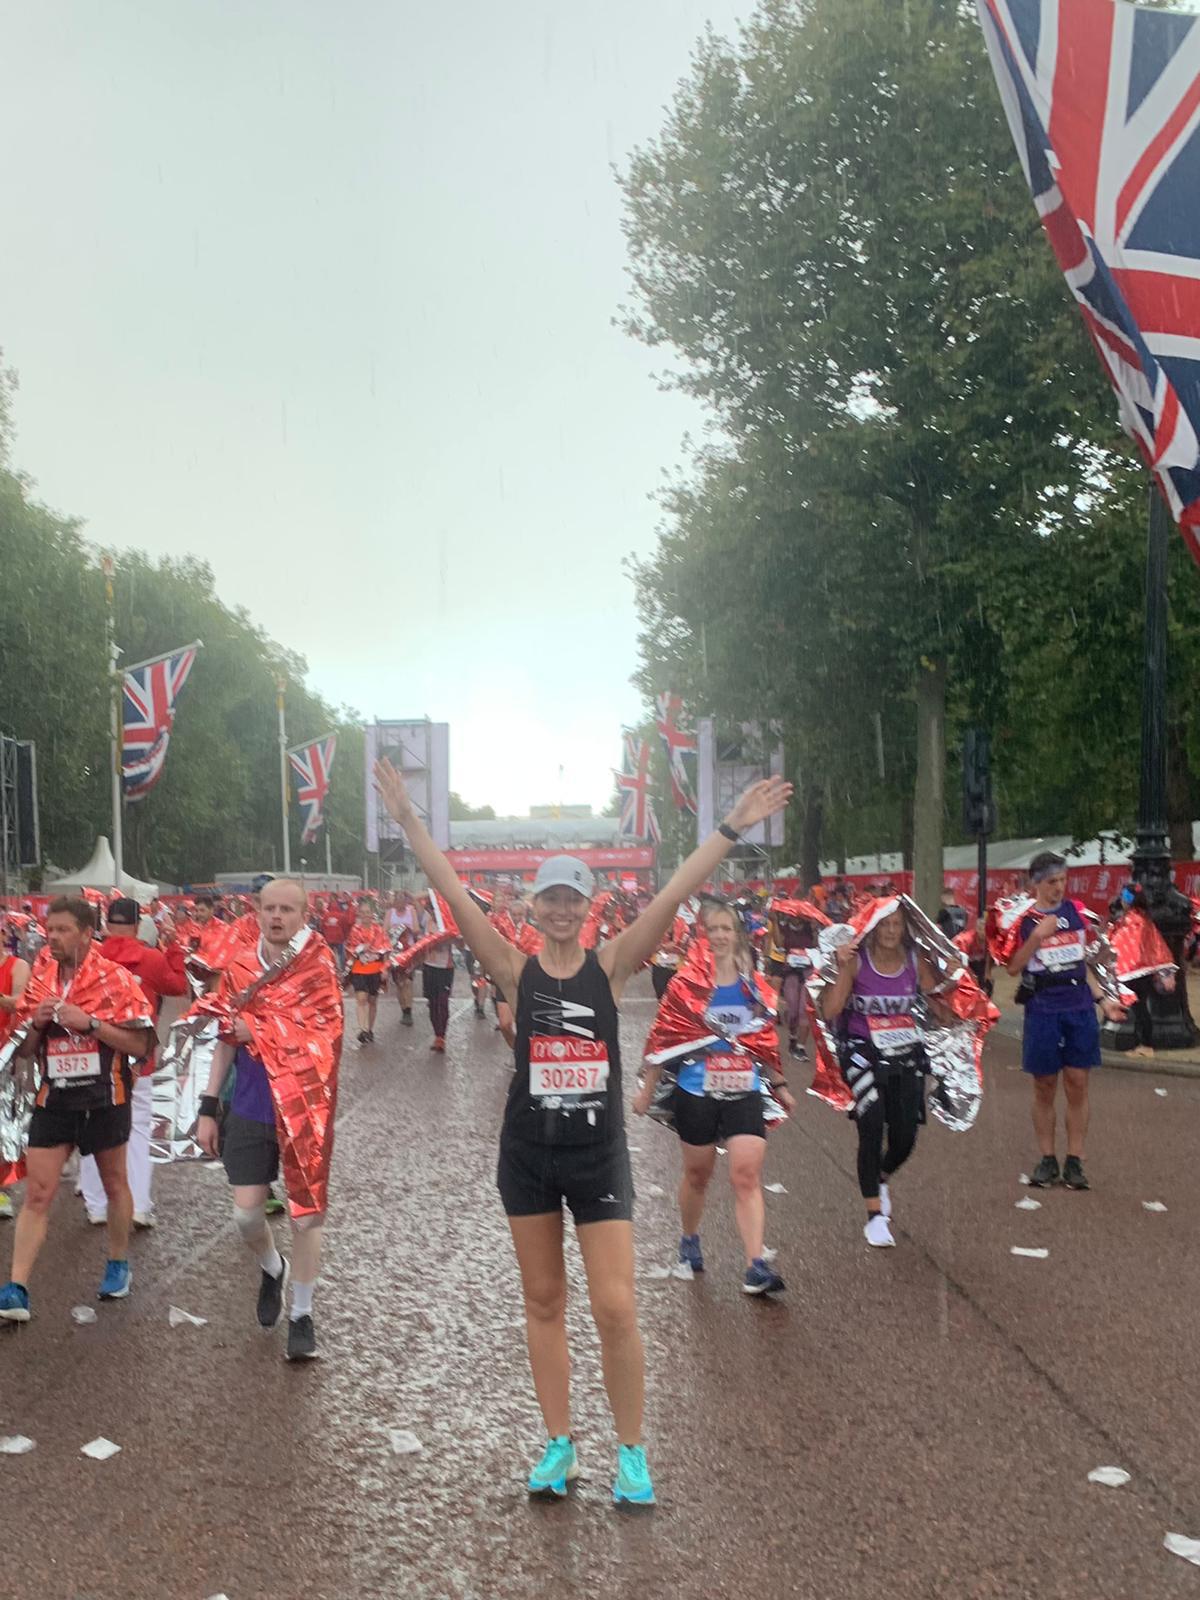 Success for Tara and Tim in debut London Marathon